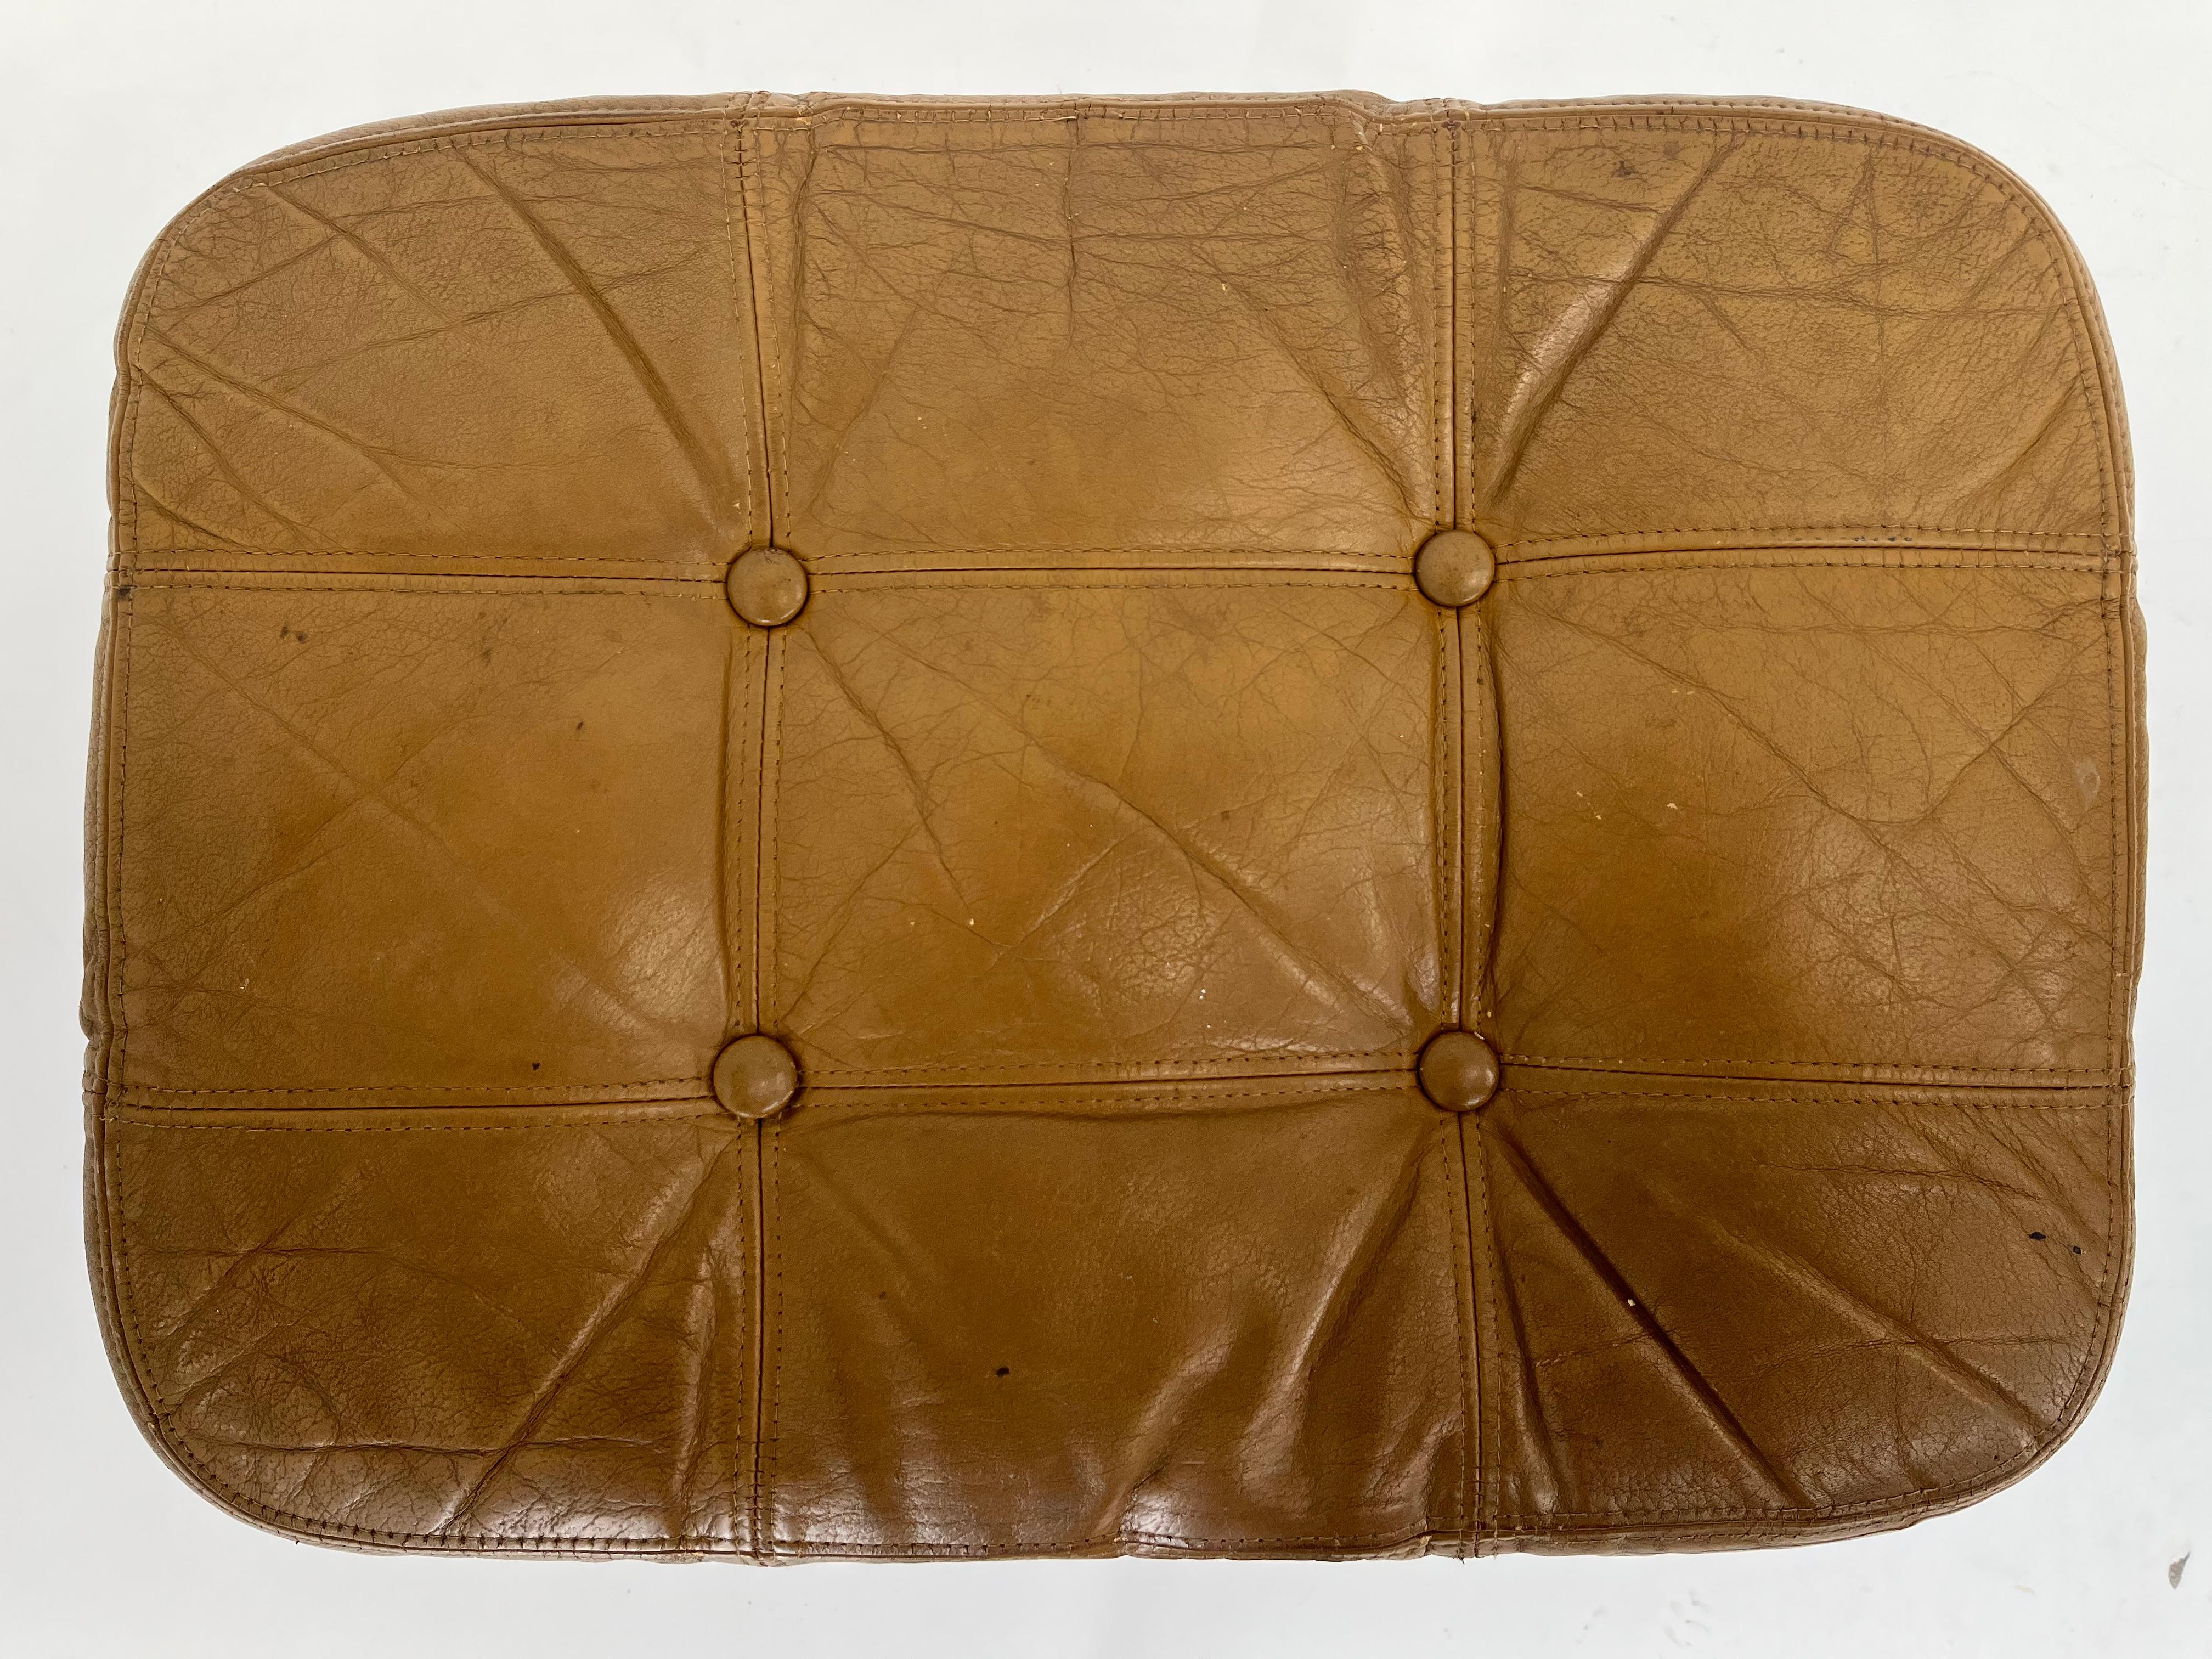 Finnish Rare Midcentury Design Stool Ot Leather Tabouret by Peem, 1970s